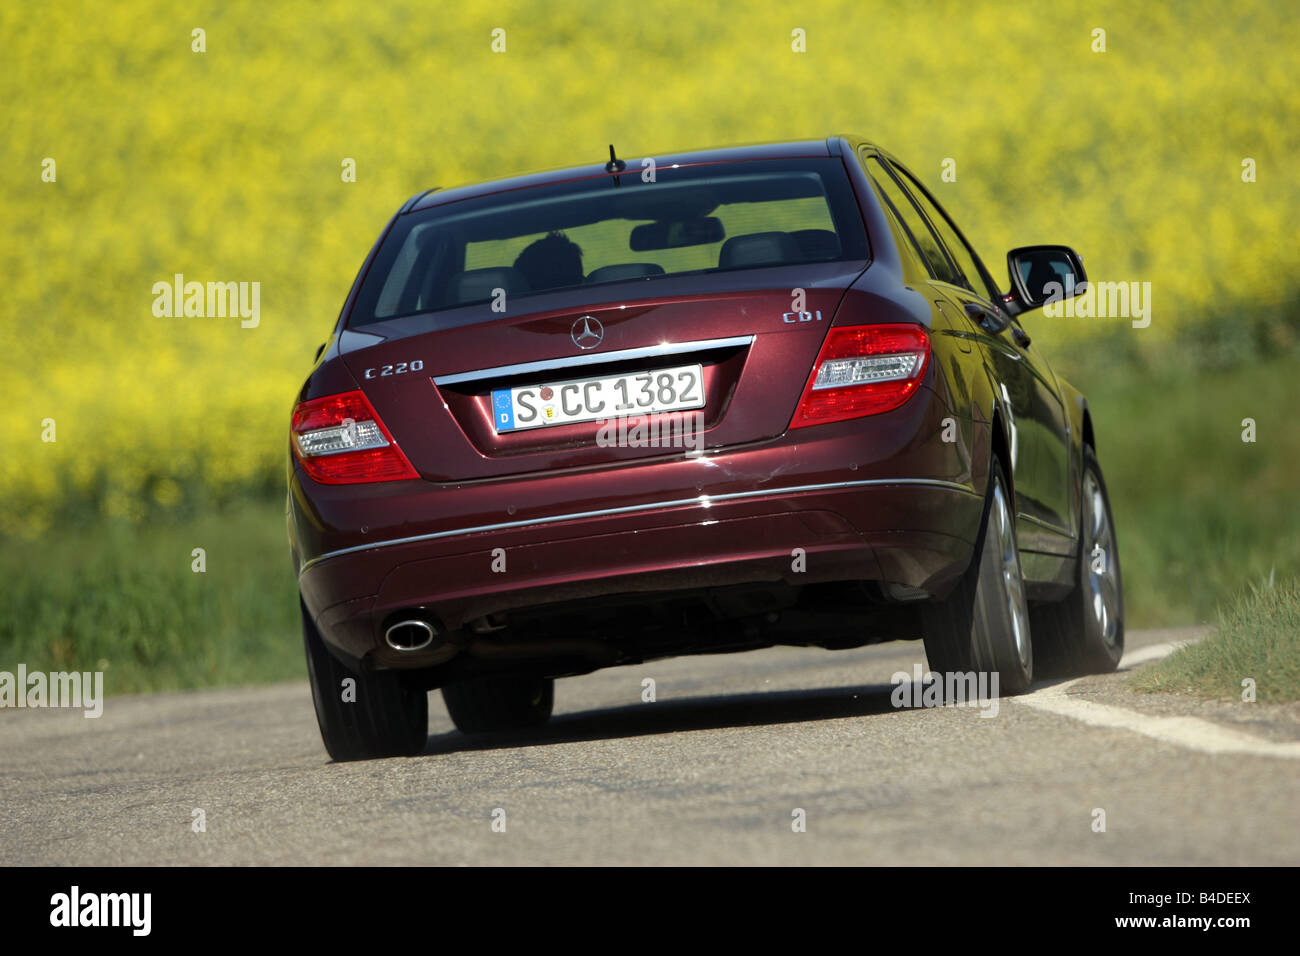 Mercedes c 220 cdi fotografías e imágenes de alta resolución - Alamy